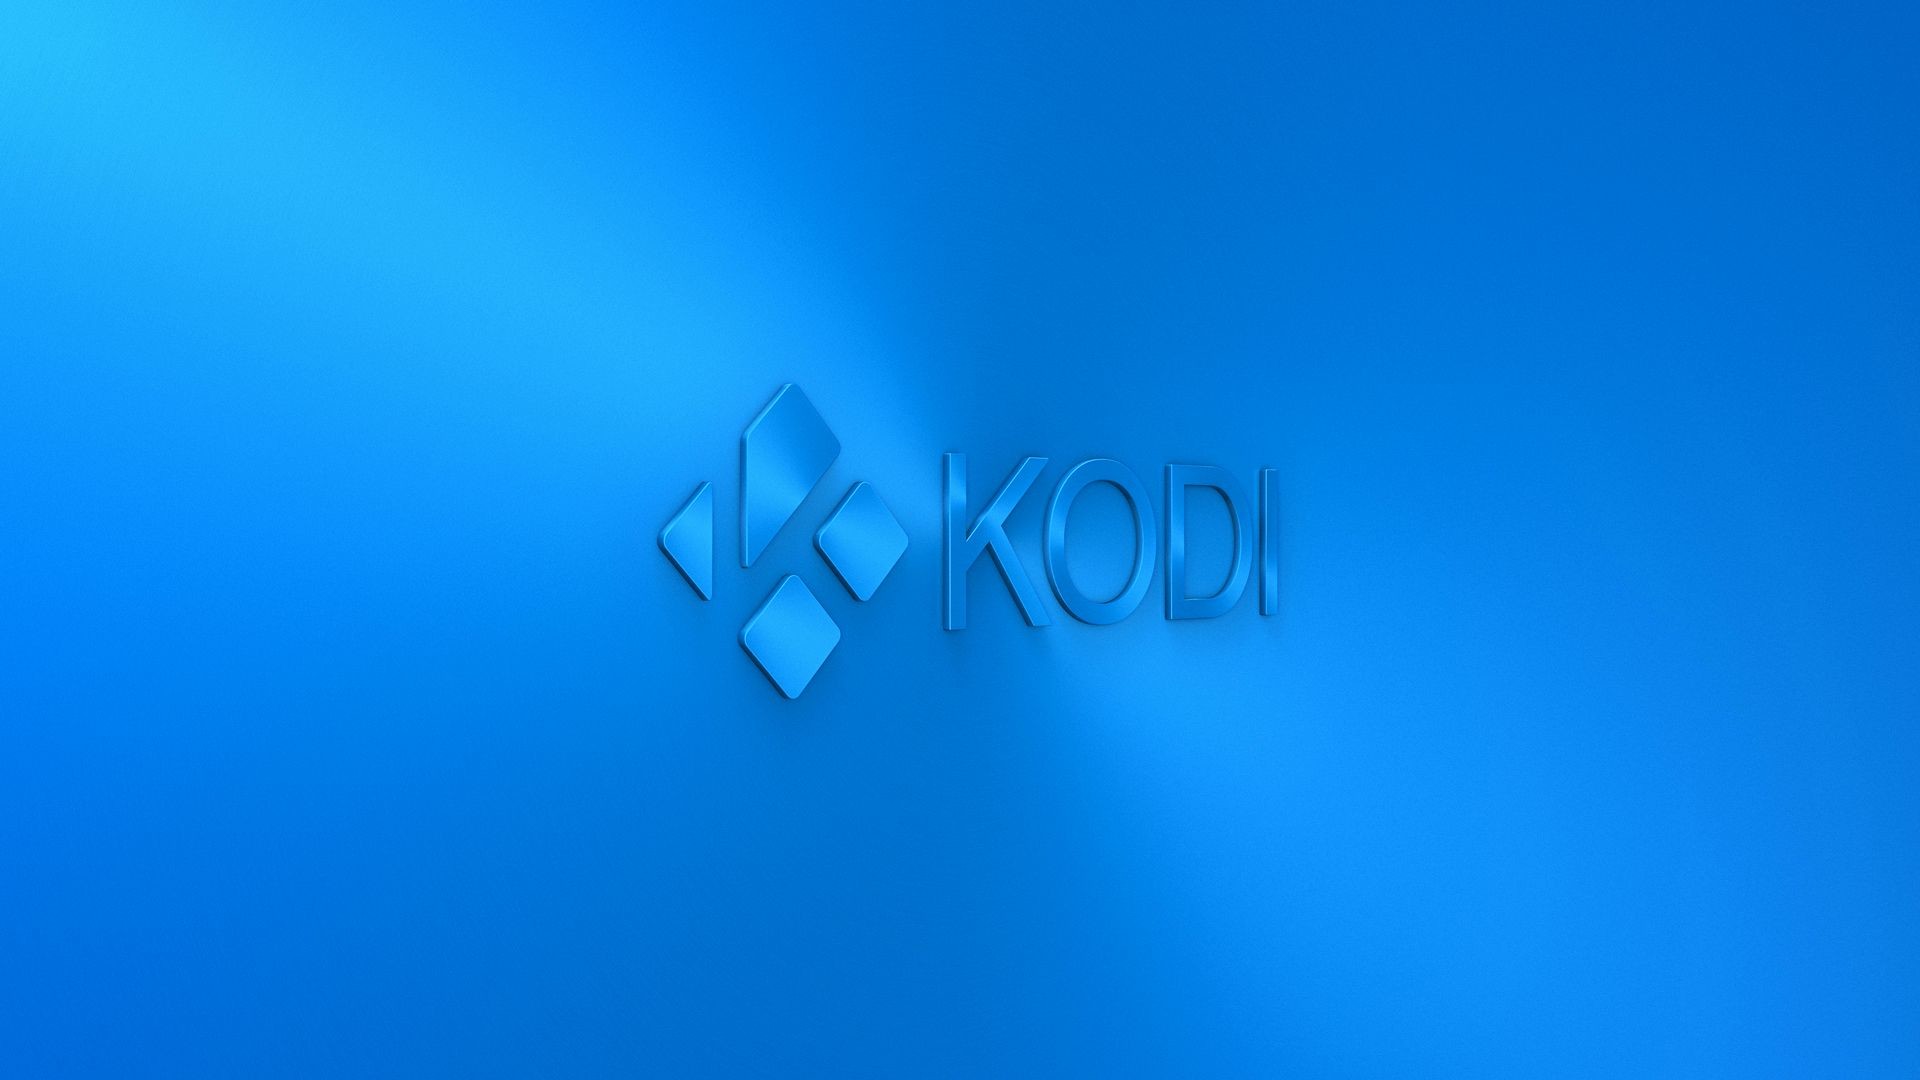 100+] Kodi Wallpapers | Wallpapers.com